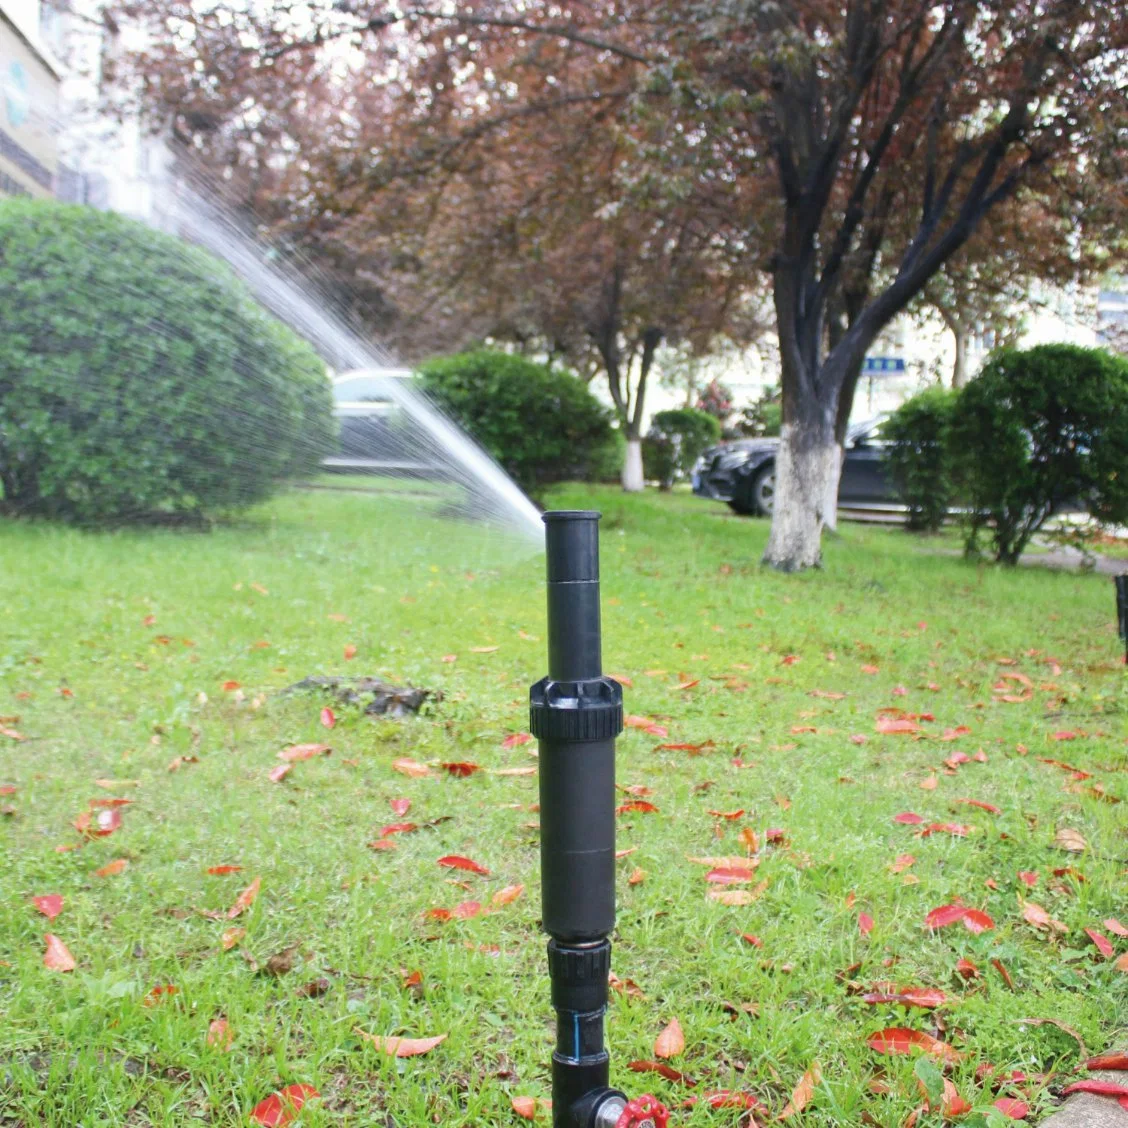 Garden Irrigation Plastic Pop up Rotor Sprinkler with Nozzle Set for Irrigation System